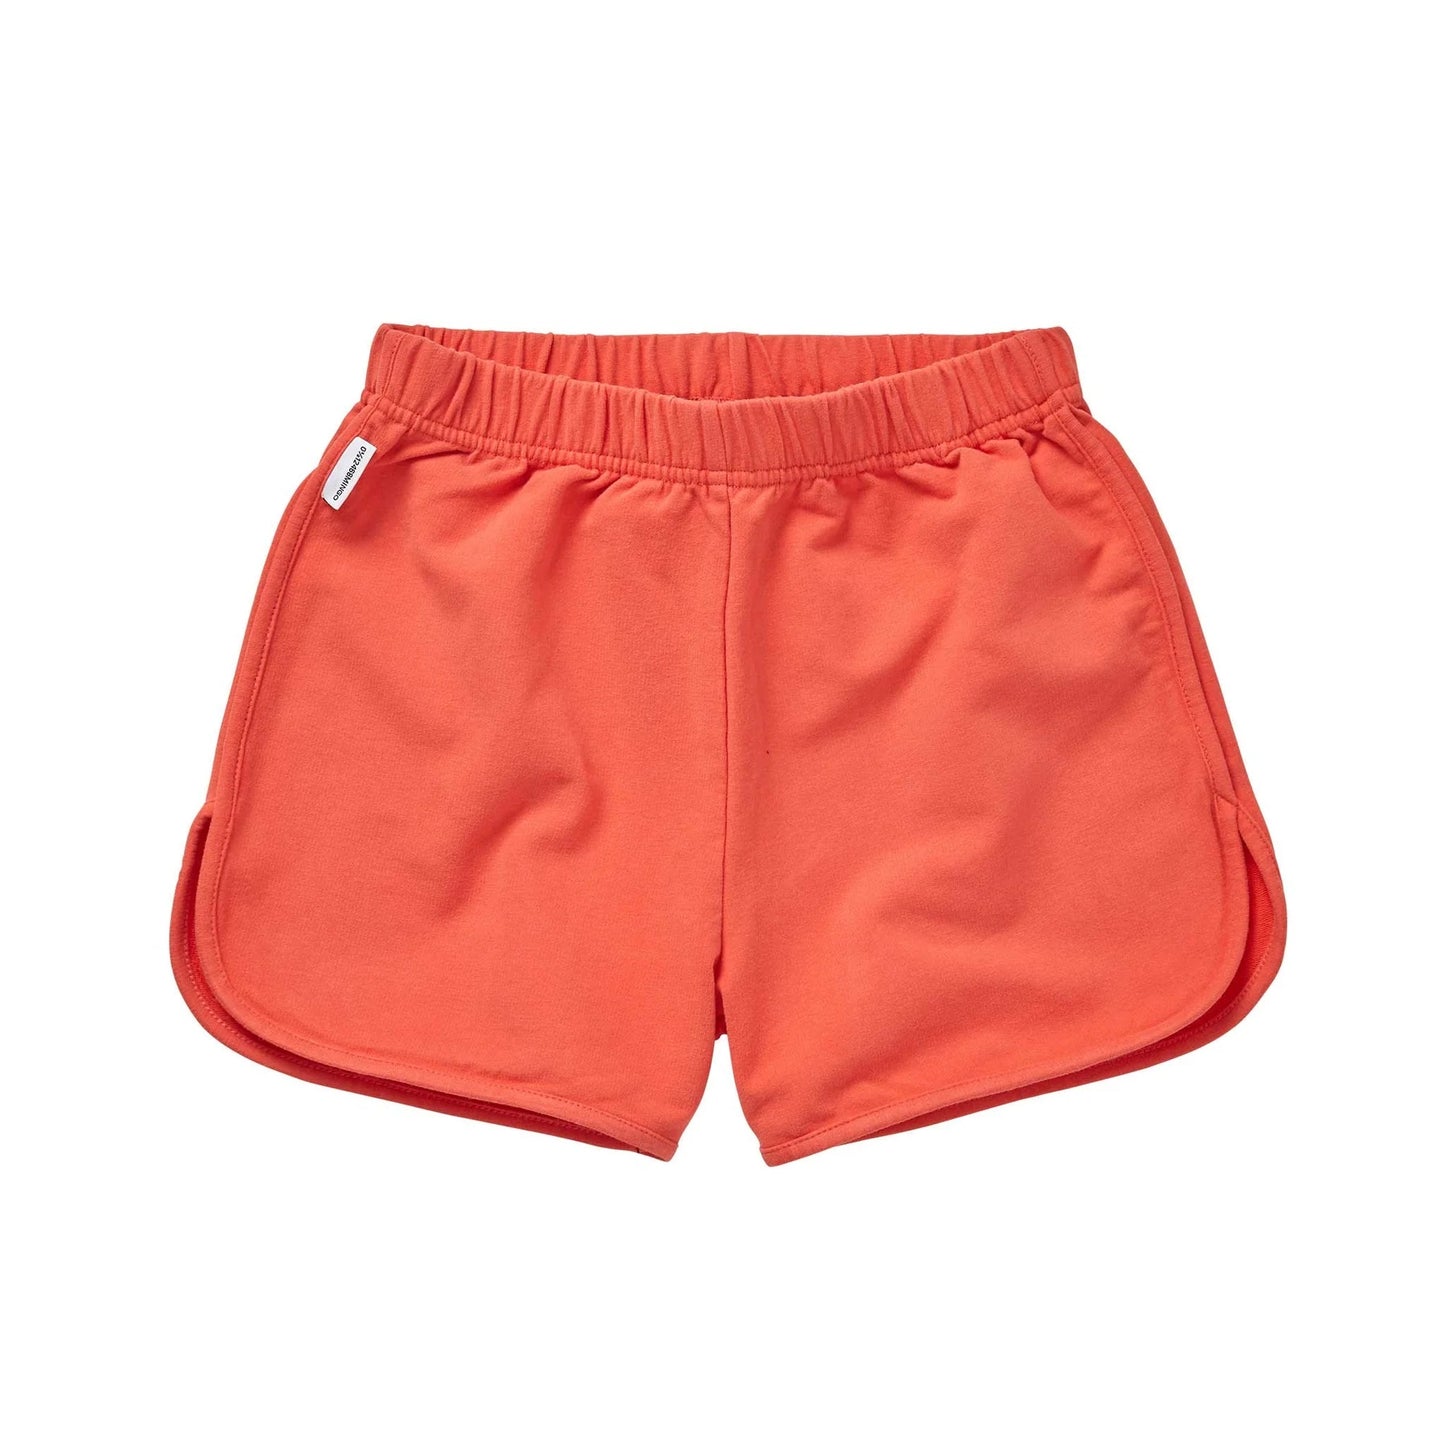 MINGO High Shorts Coral ALWAYS SHOW